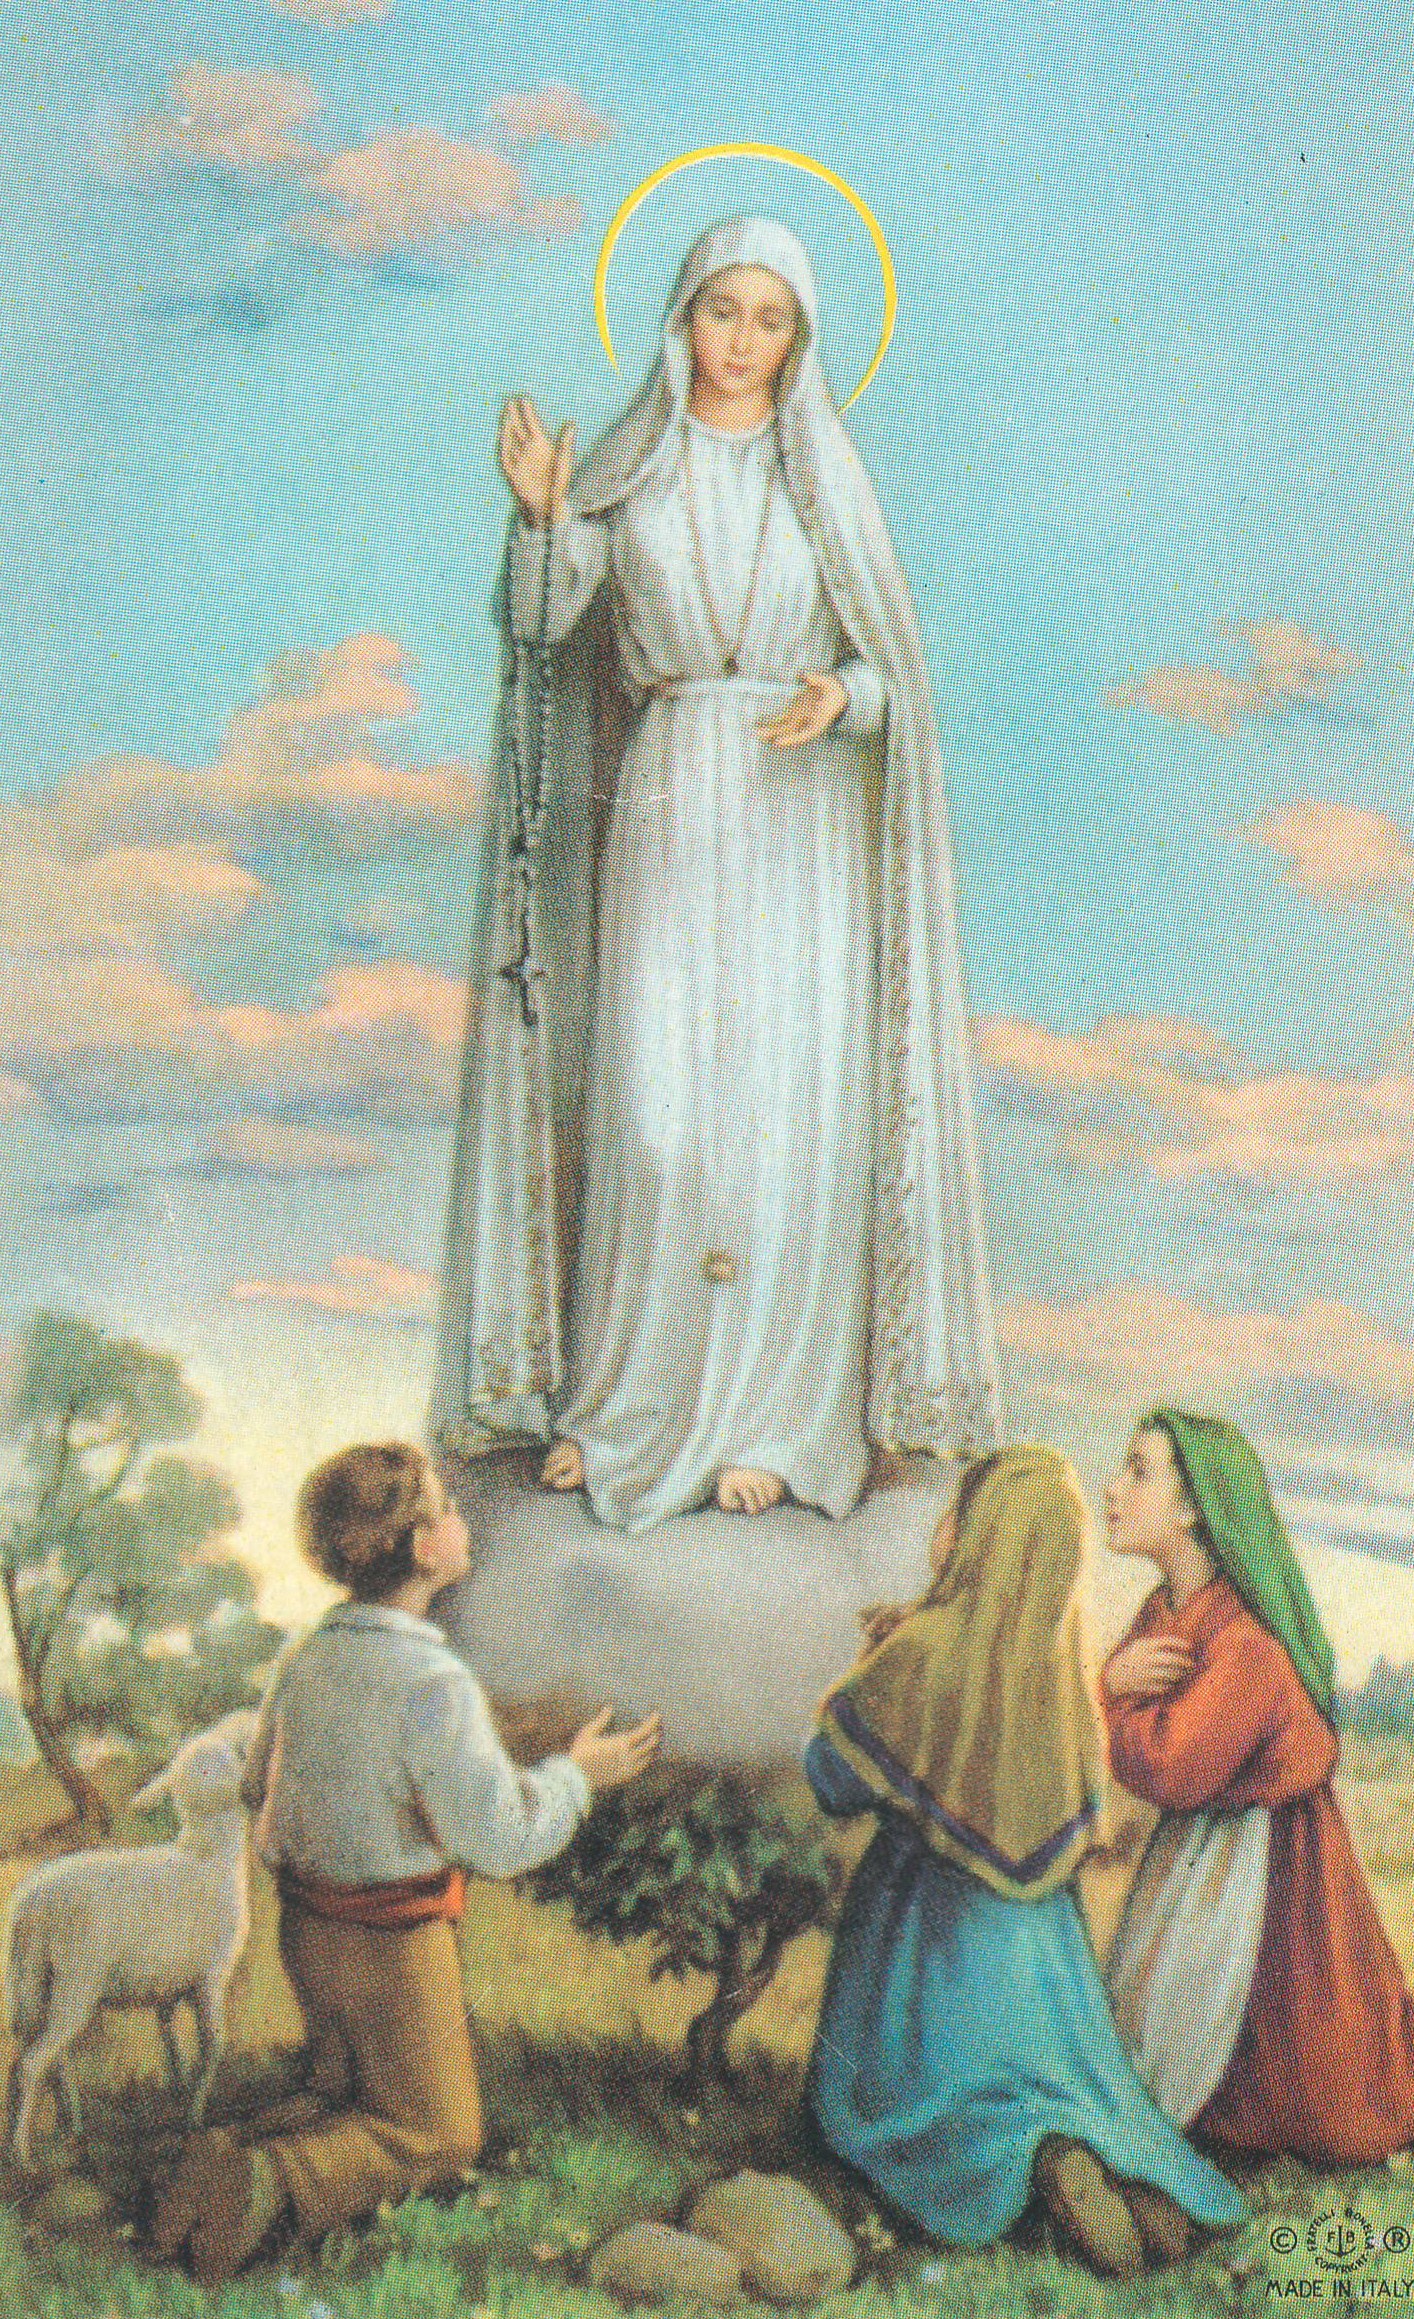 Lady of Fatima